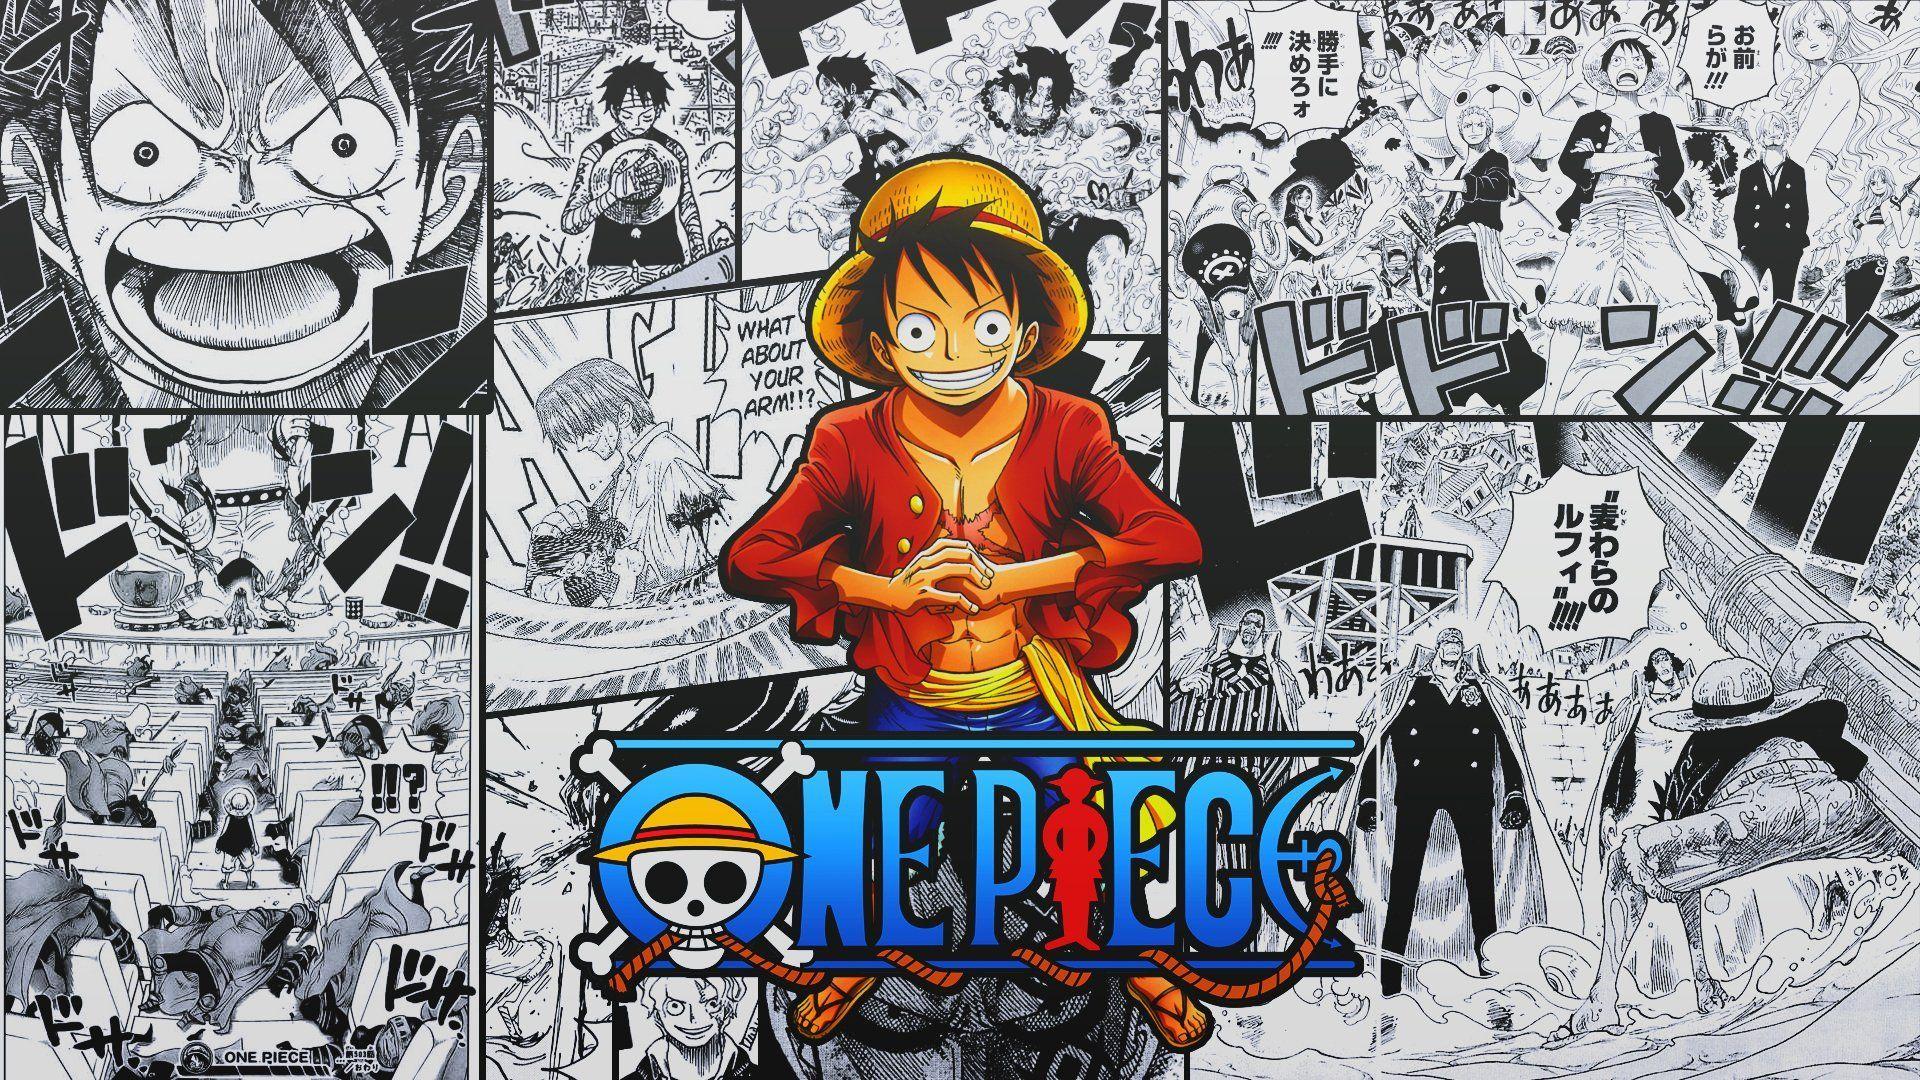 Manga One Piece 1920X1080 Wallpapers - Top Free Manga One Piece